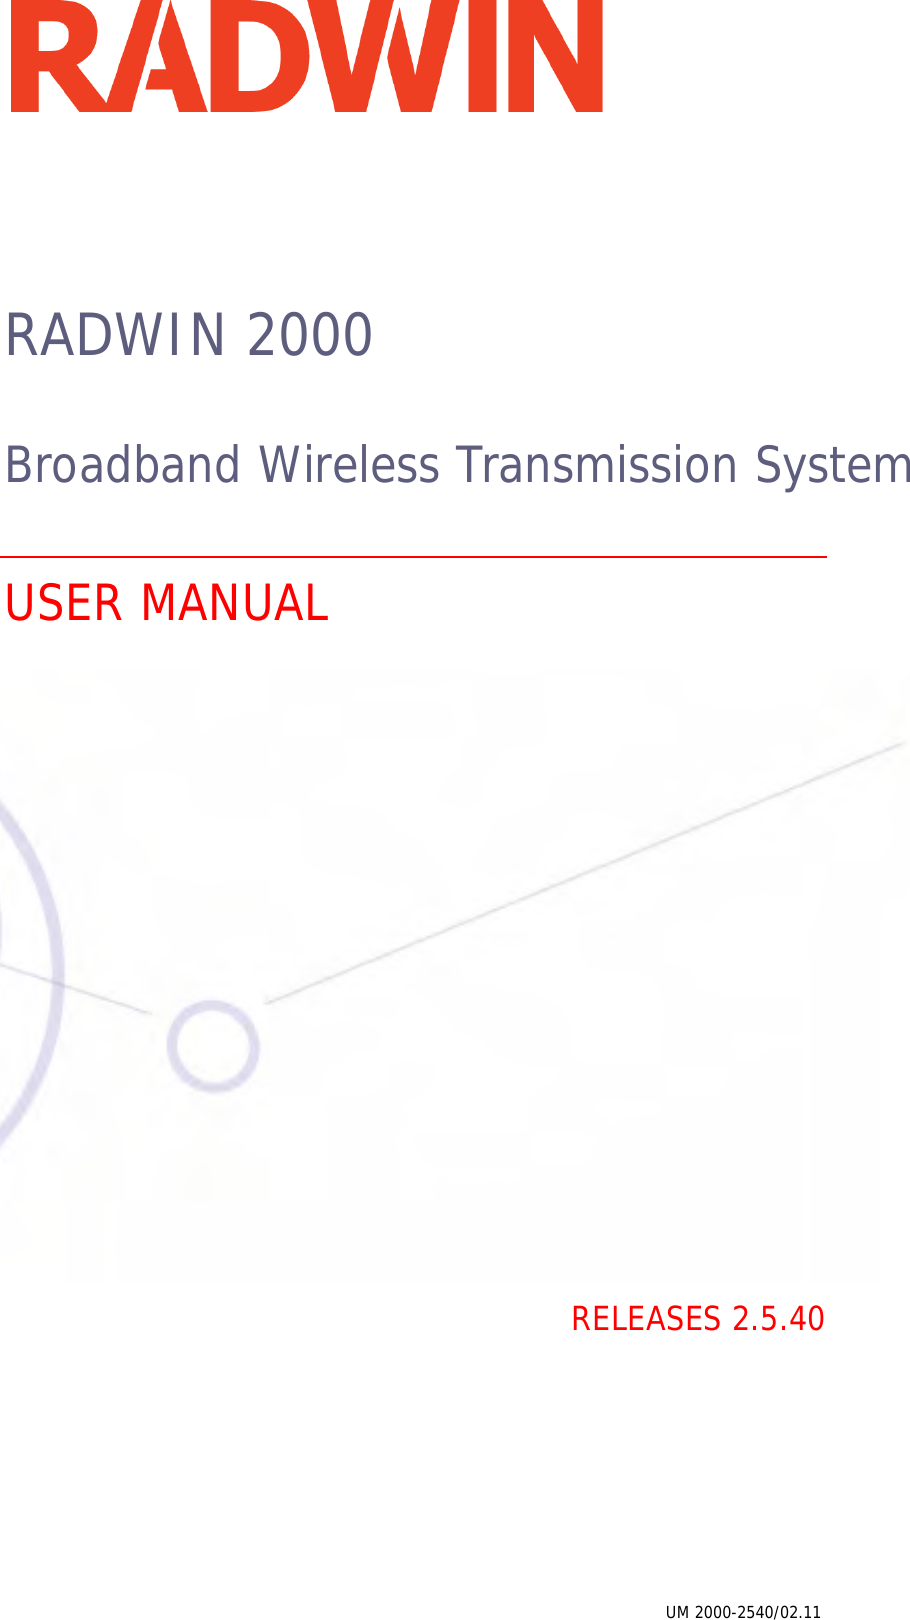 RADWIN 2000Broadband Wireless Transmission SystemUSER MANUALRELEASES 2.5.40UM 2000-2540/02.11